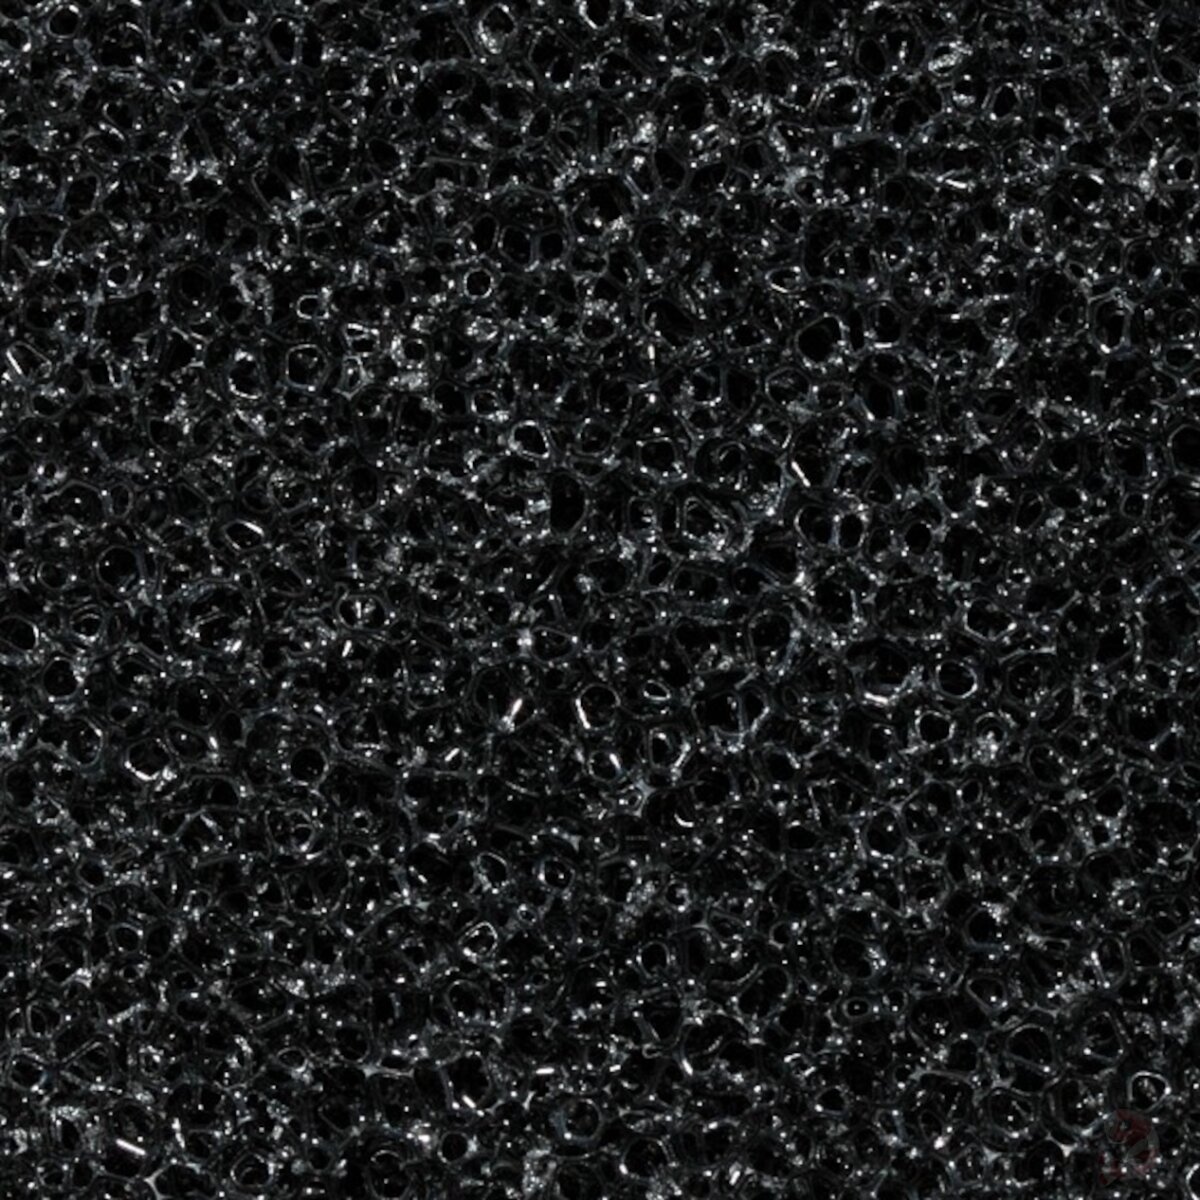 Filtermatte schwarz, 50 x 50 x 10 cm, 30 ppi